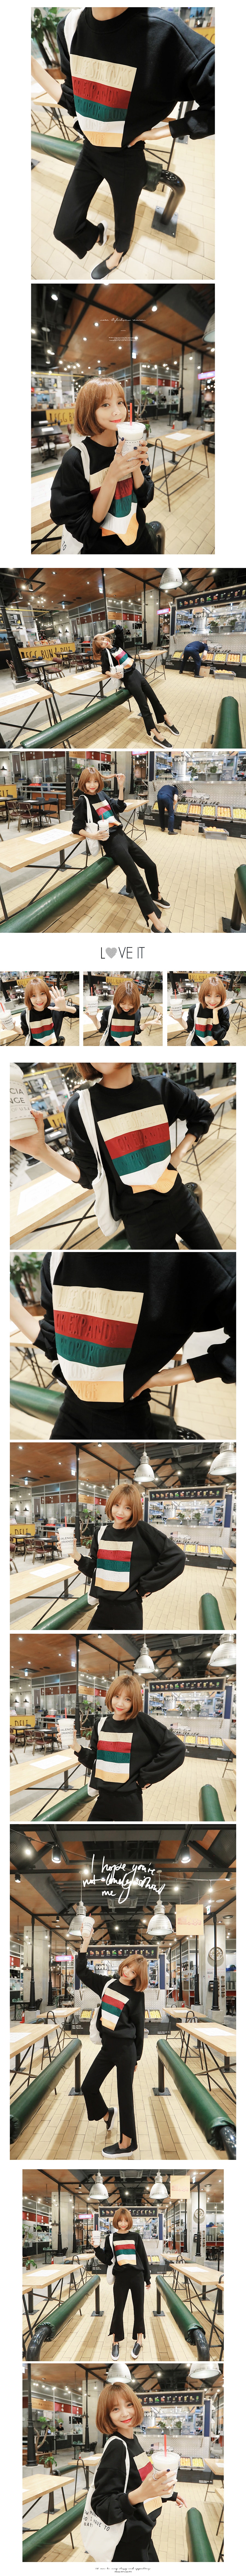 [Autumn New Set] Embossing Sweatshirt and CutOff Sweatpants 2 pieces Set Black One Size(S-M)